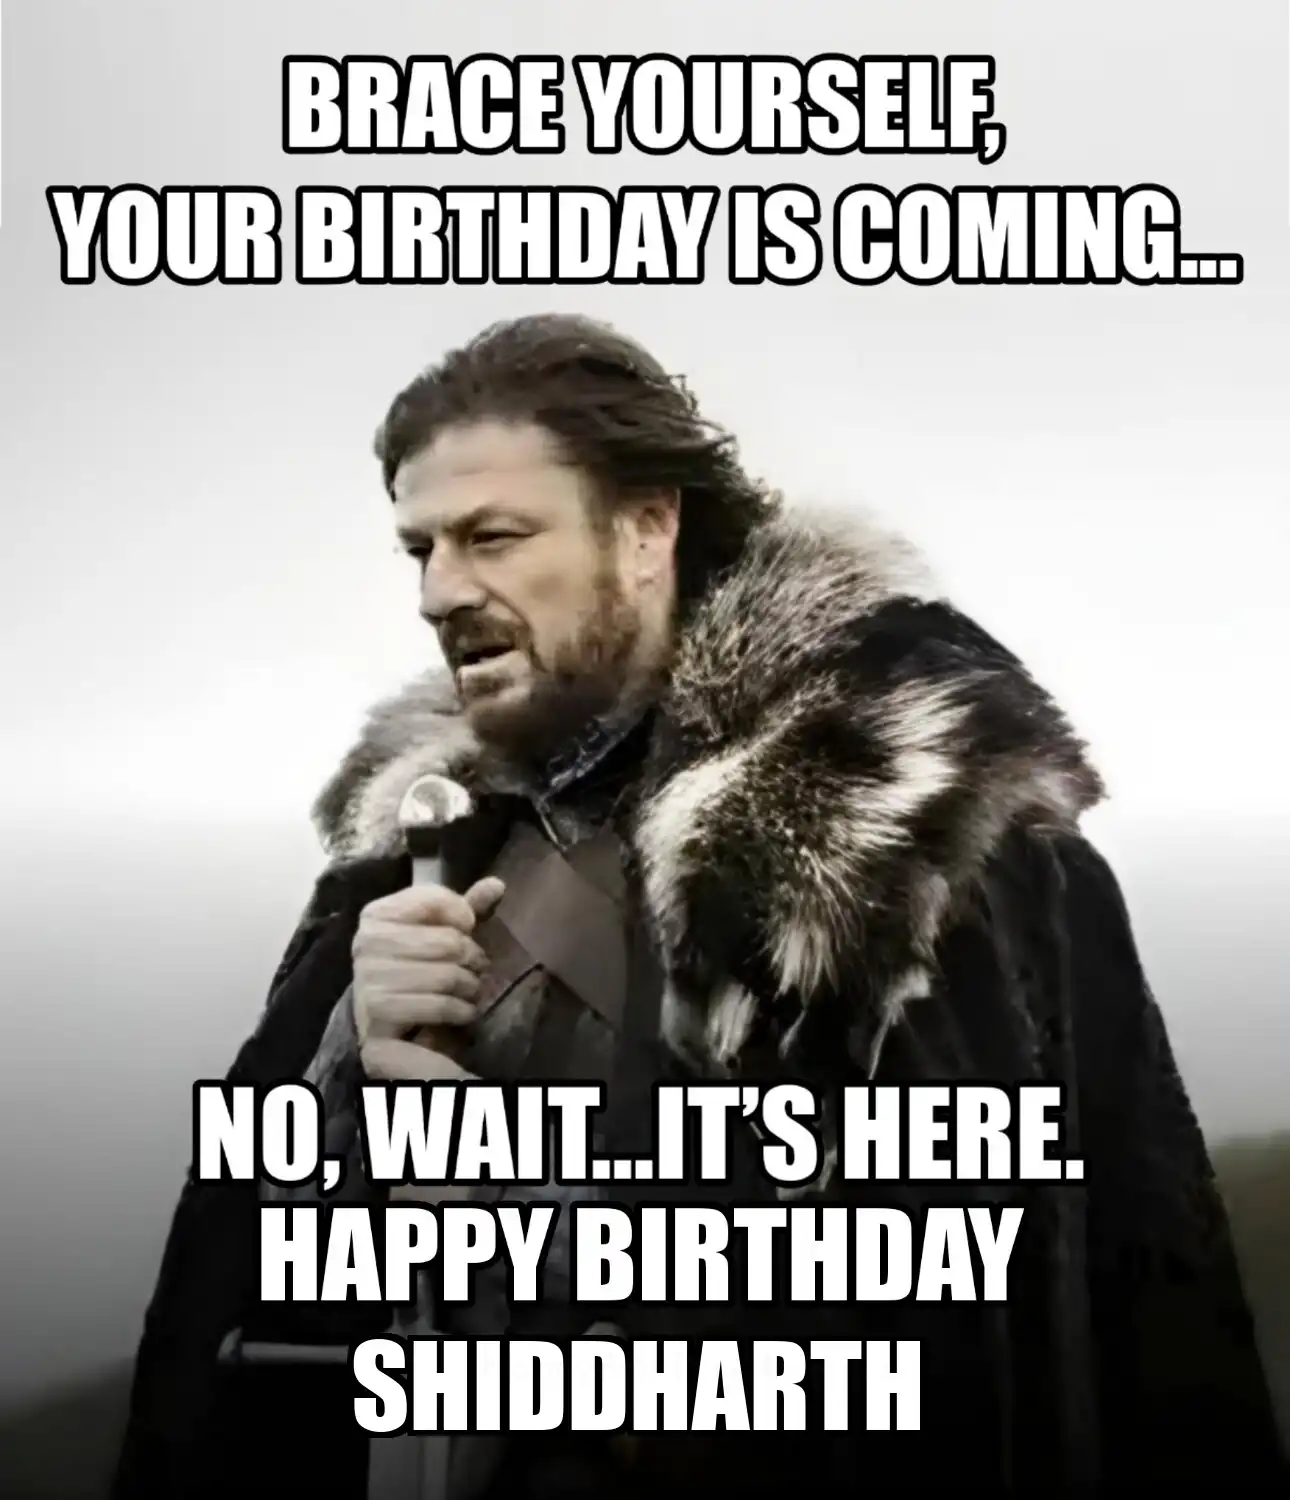 Happy Birthday Shiddharth Brace Yourself Your Birthday Is Coming Meme